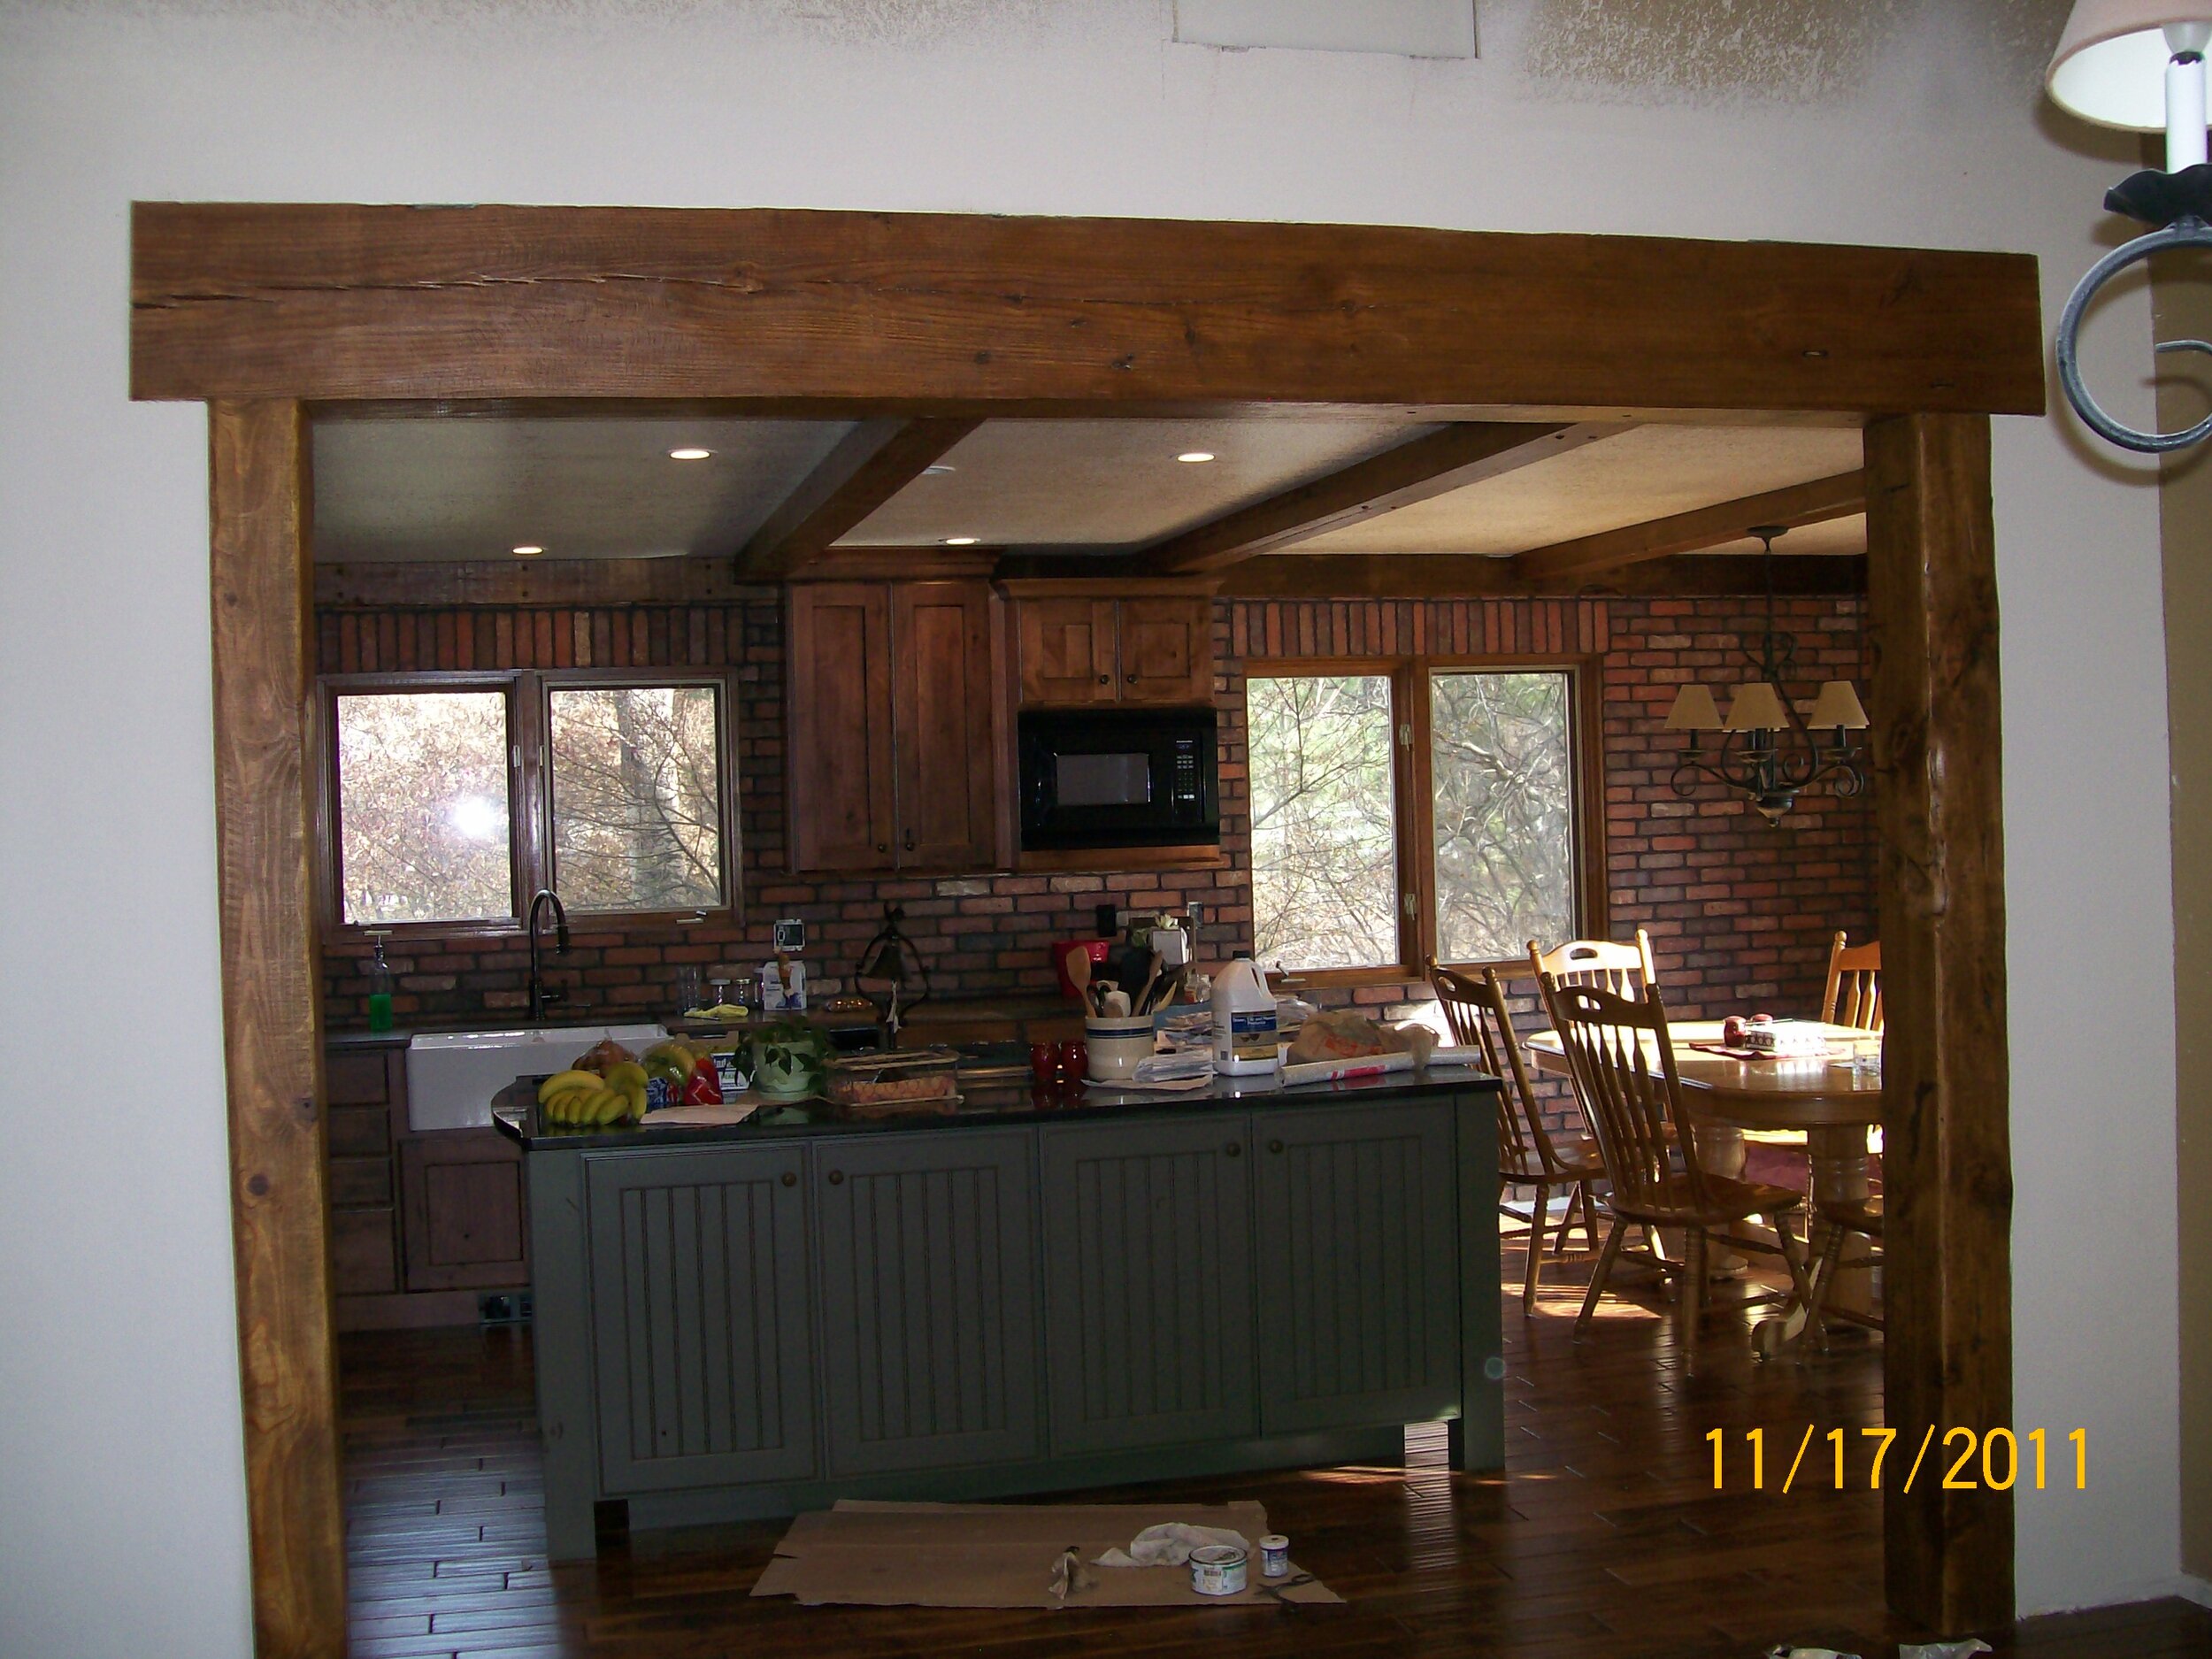 new cabenits, beams, kitchen.jpg